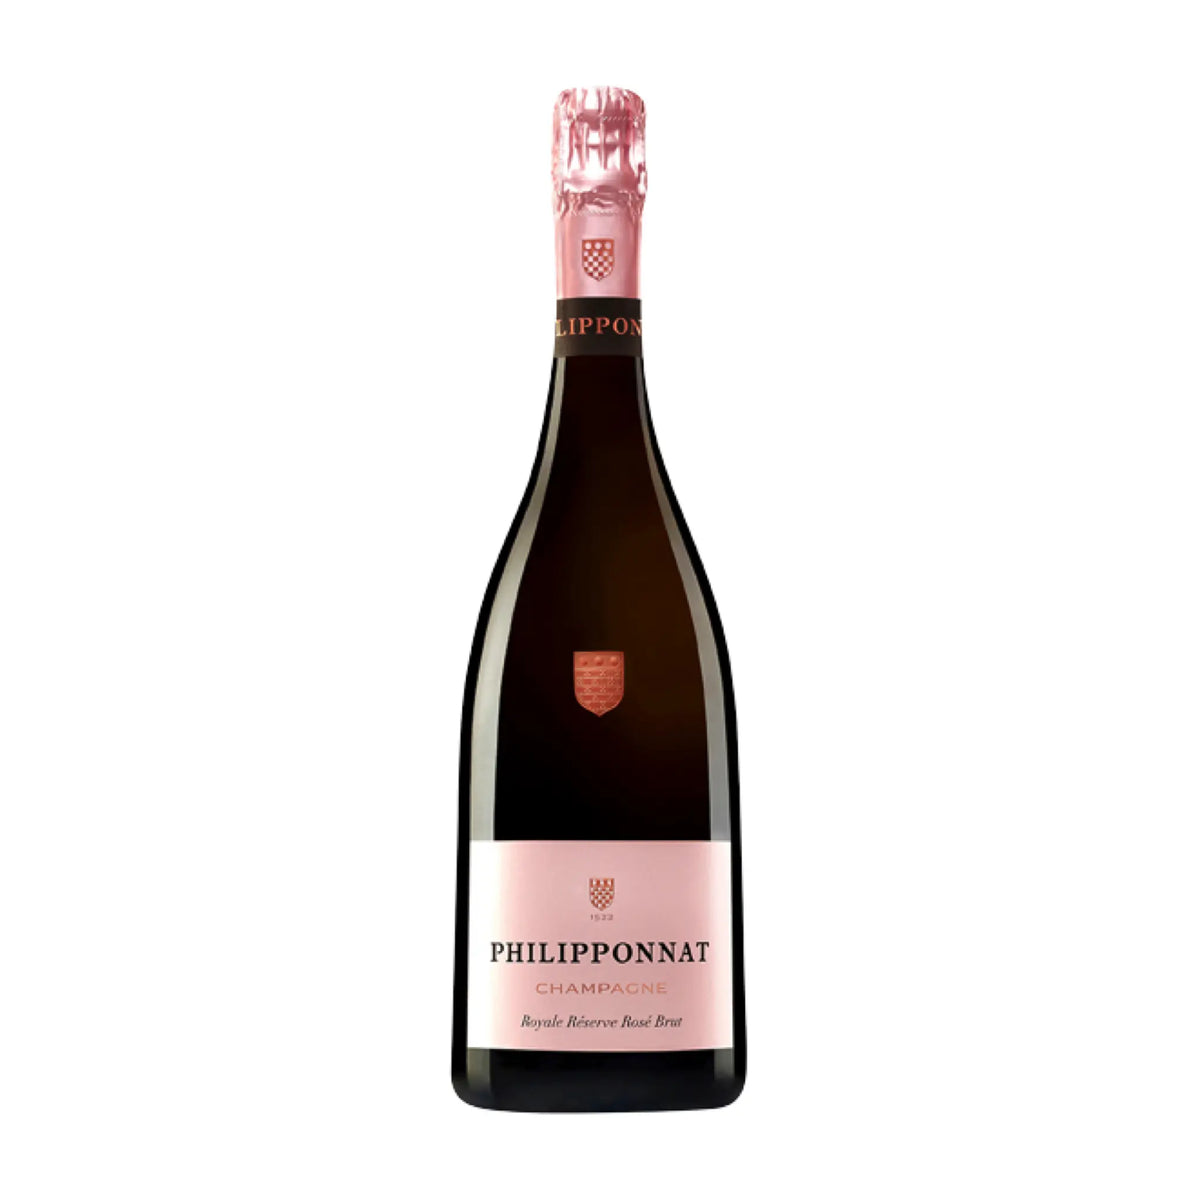 Philipponnat-Champagner-Pinot Noir, Chardonnay, Pinot Meunier-Royale Reserve Rosé-WINECOM